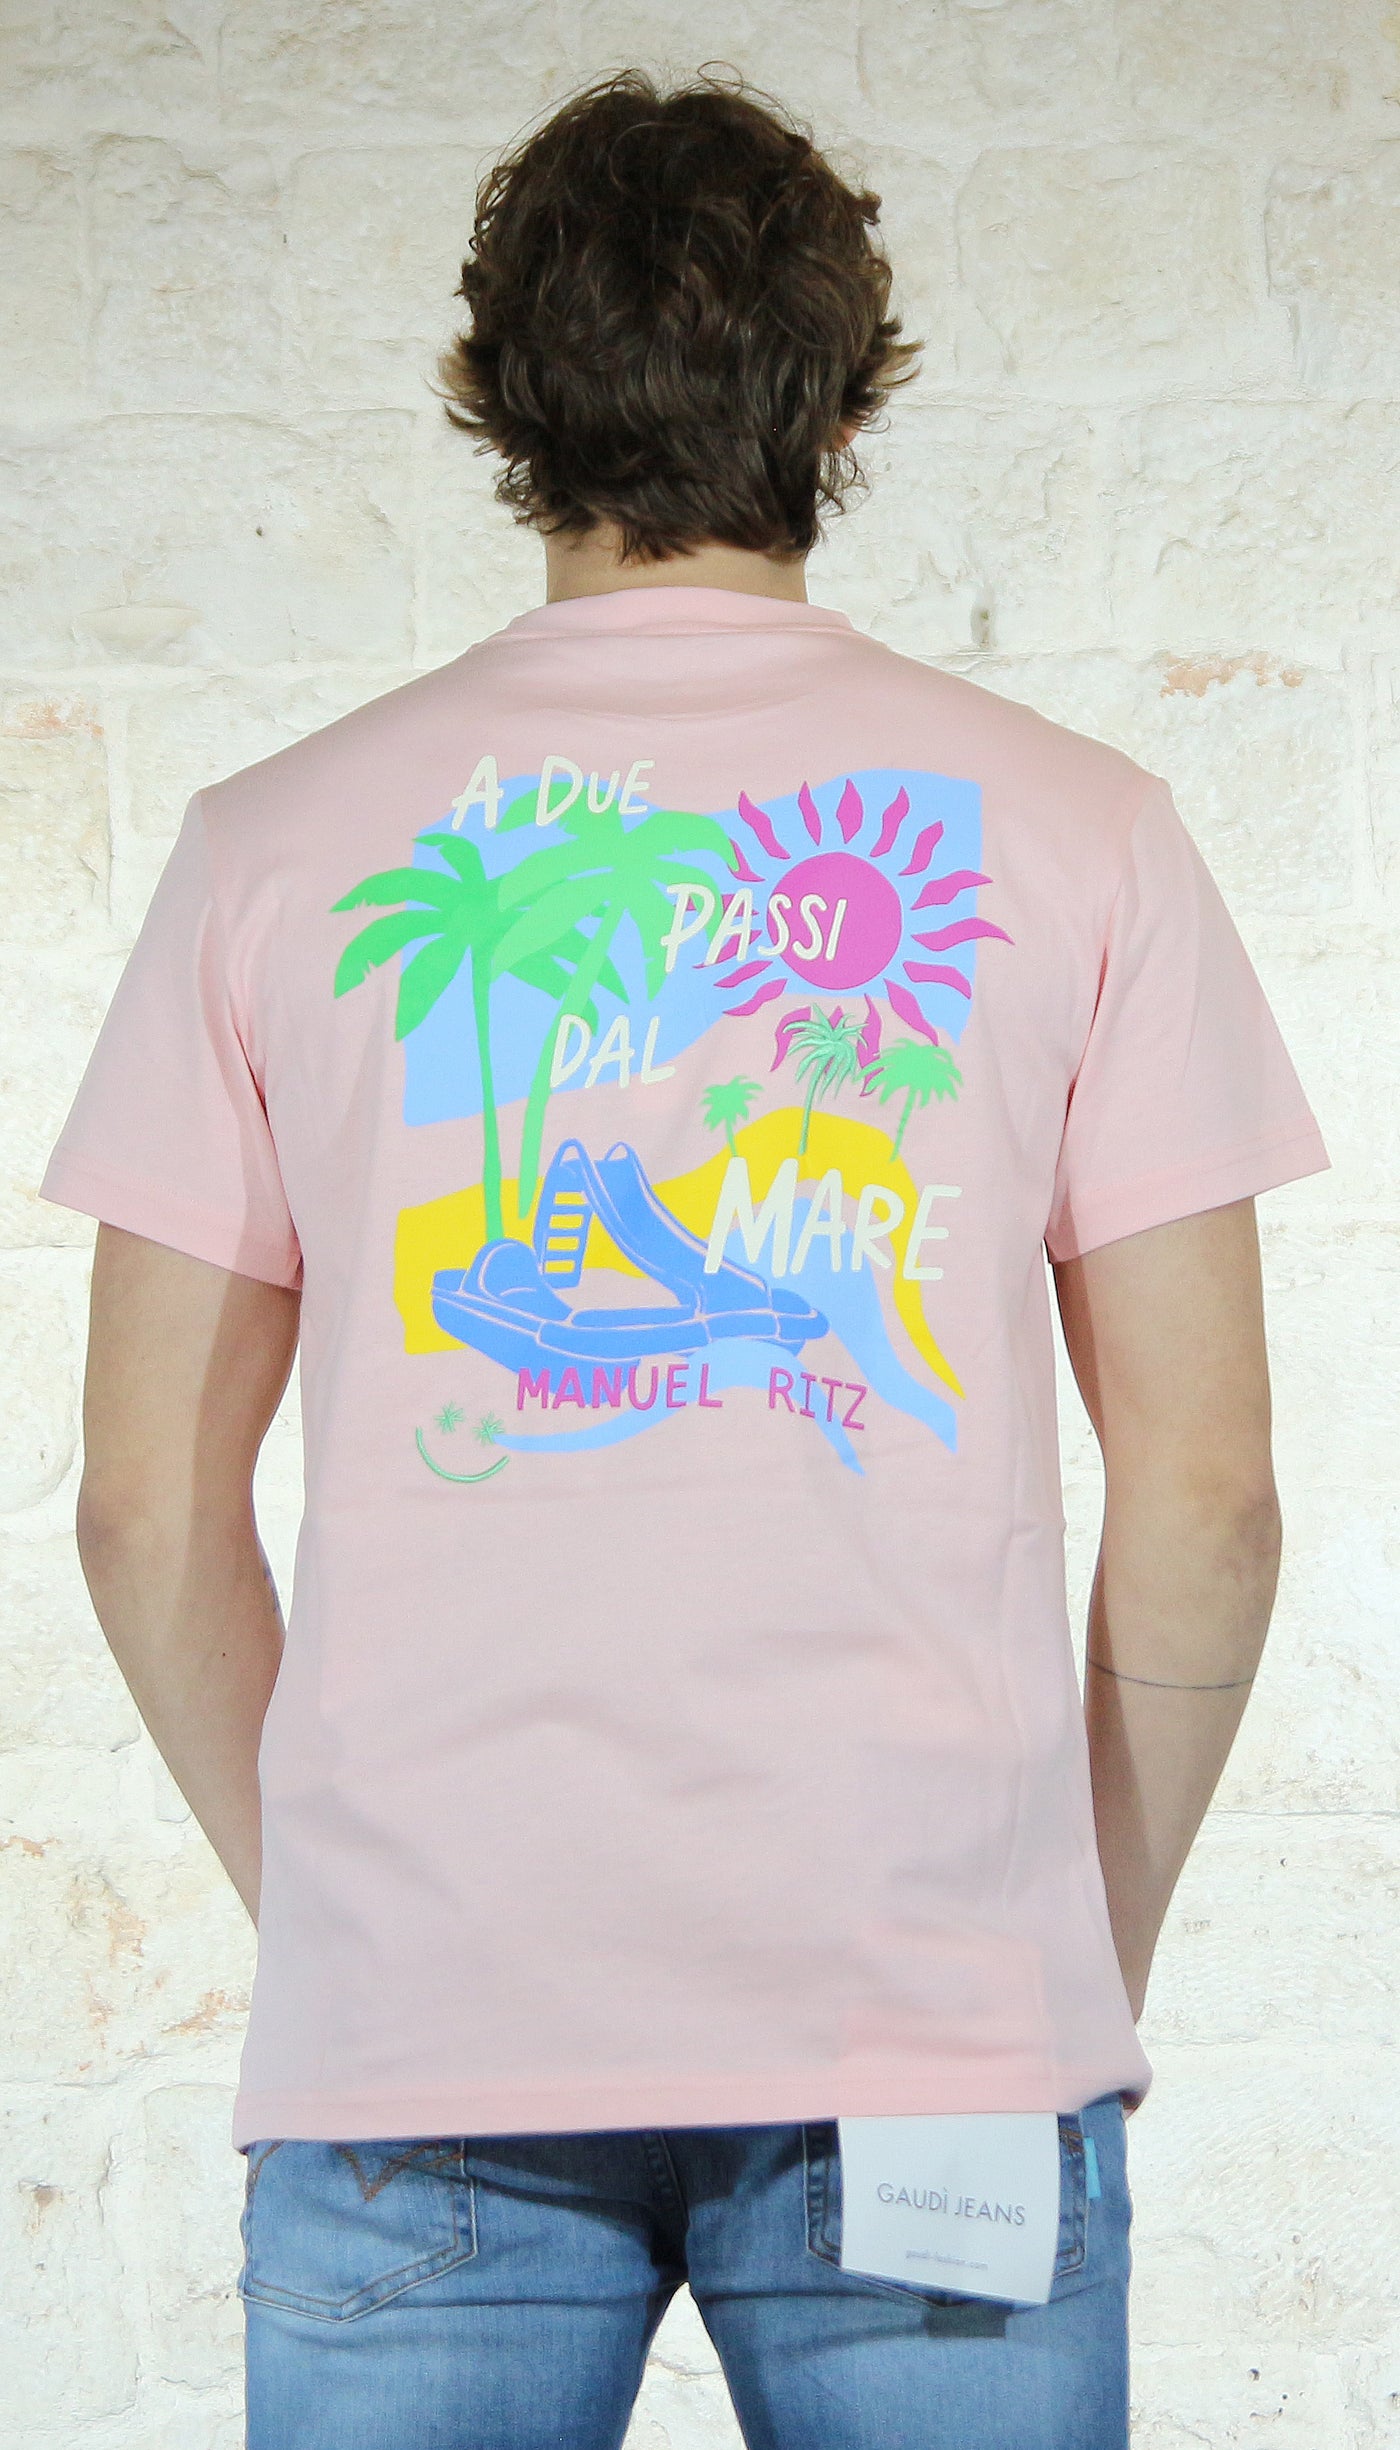 Manuel Ritz T-shirt 'a due passi dal mare' in cotone